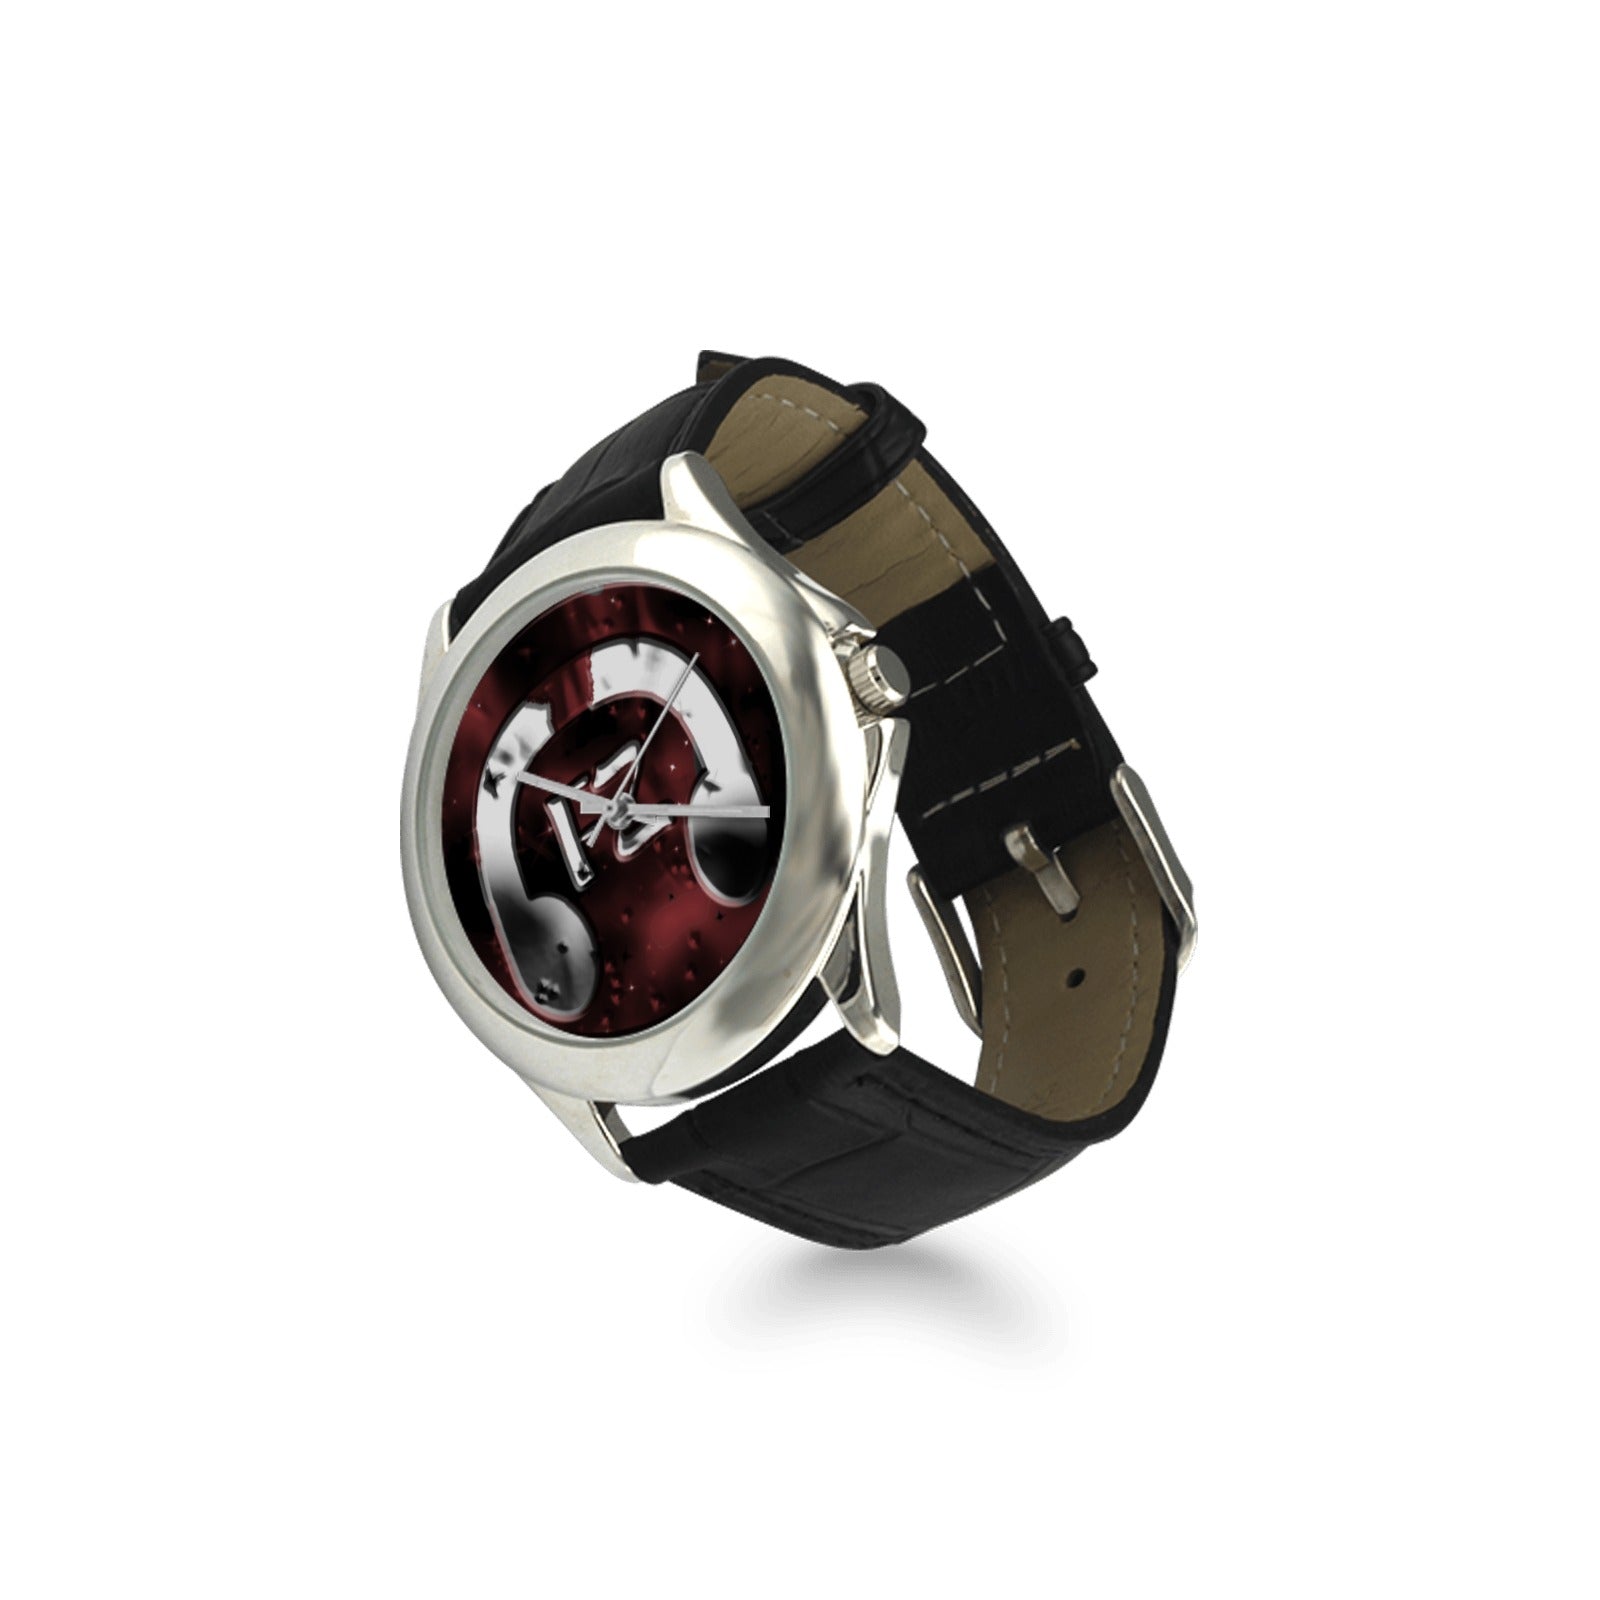 fz women's watch - burgundy women's classic leather strap watch (model 203)